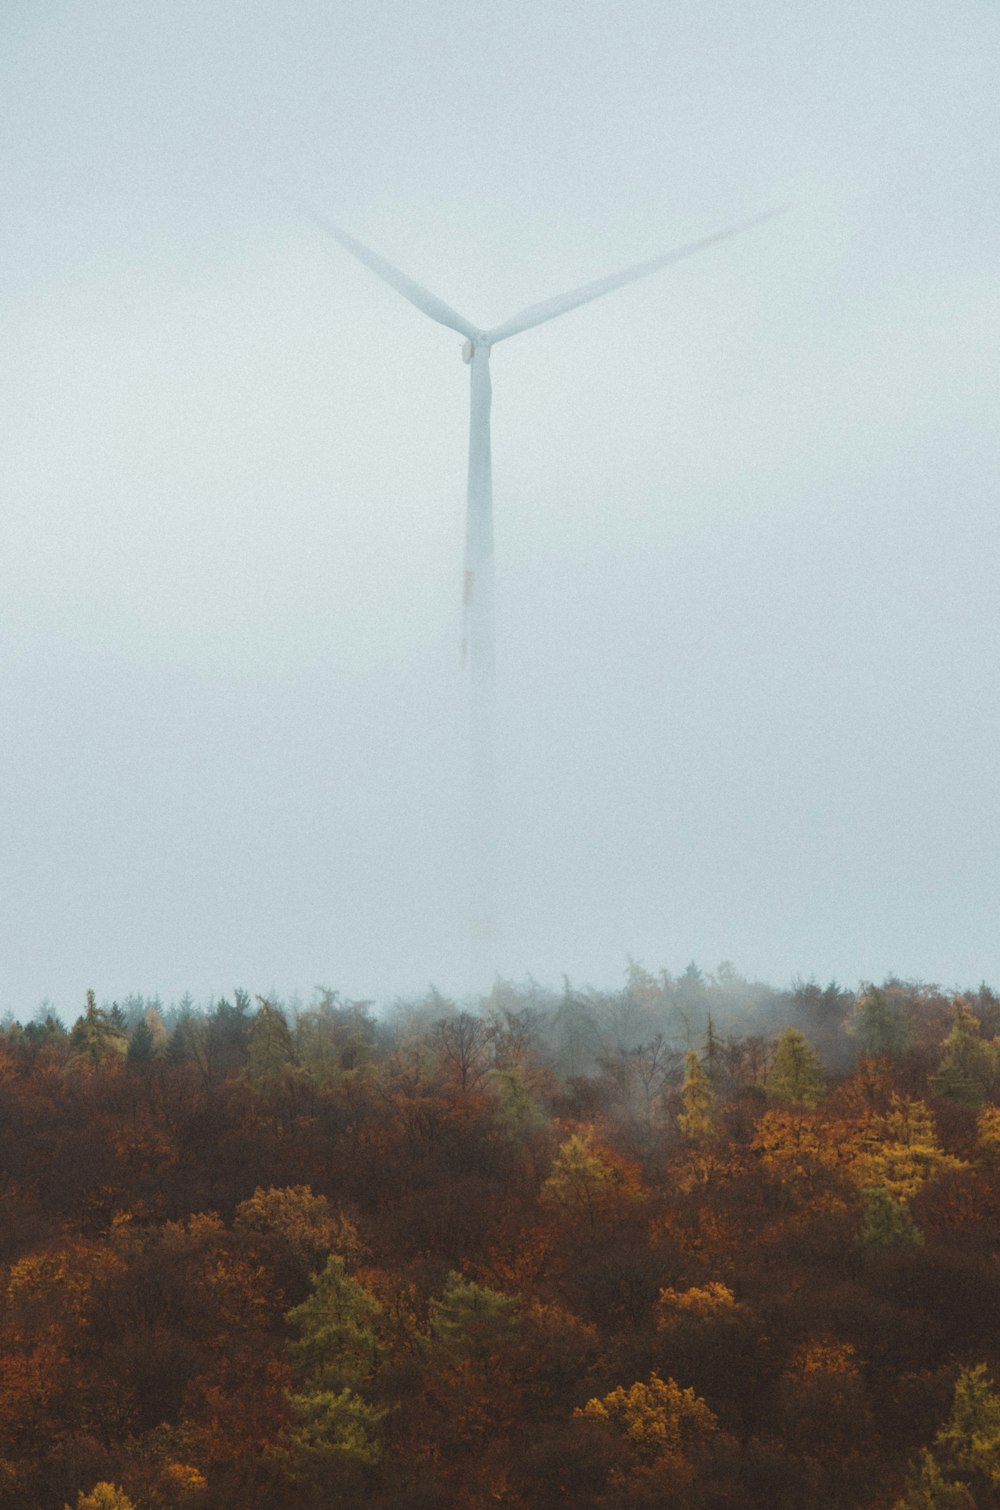 wind turbine covered in fog near forest